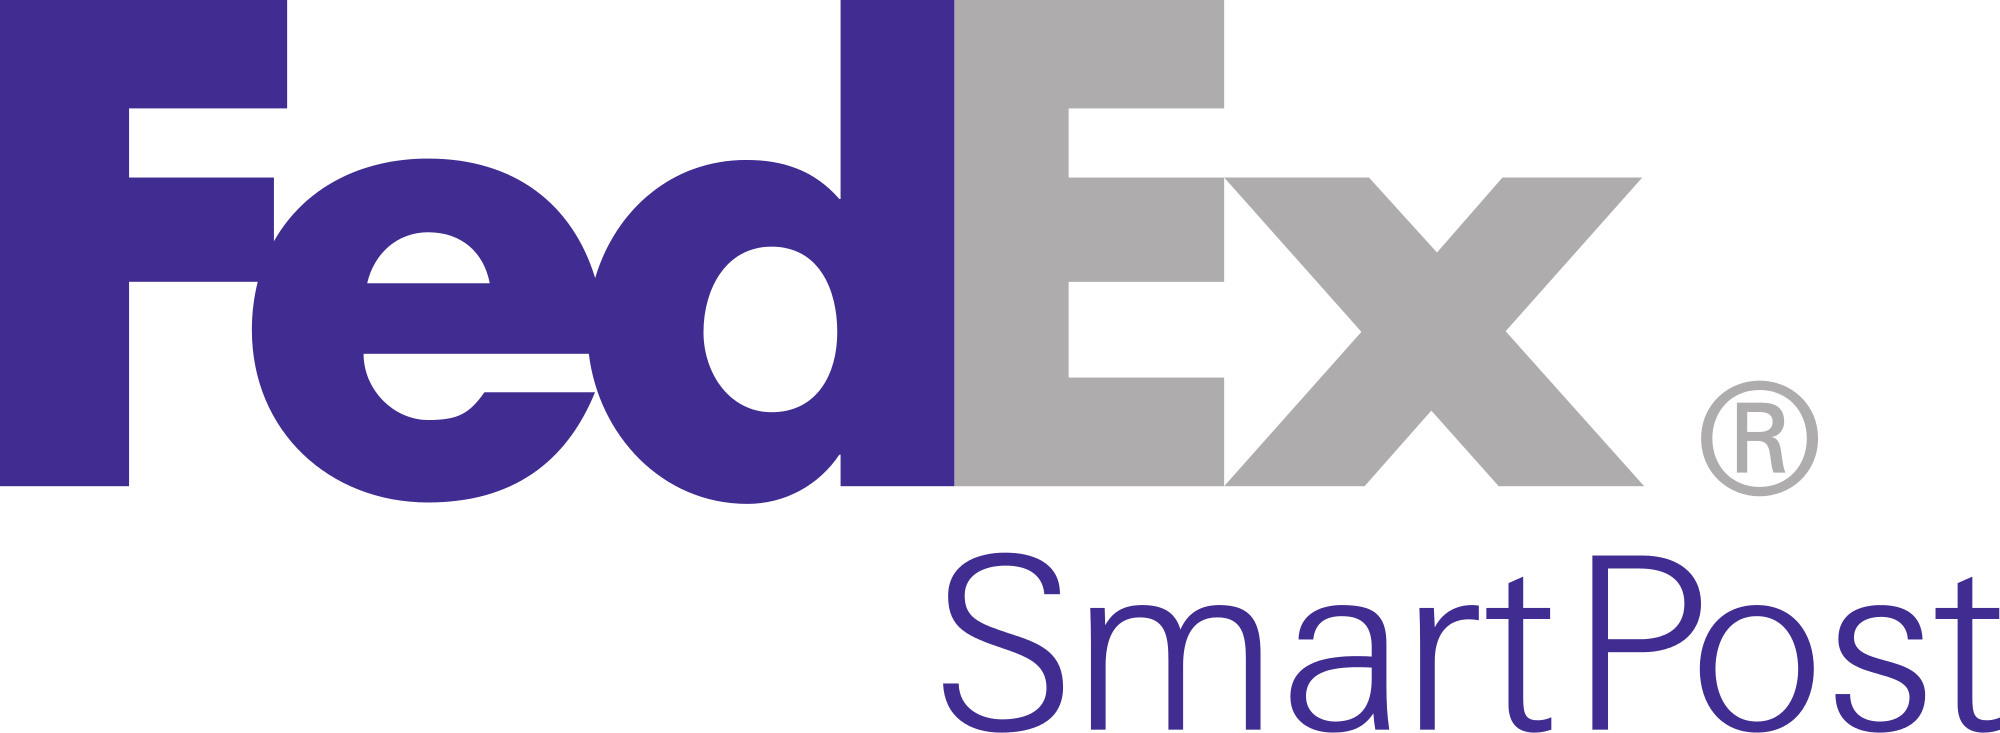 FedEx SmartPost Logo - File:FedEx SmartPost logo.svg - Wikimedia Commons